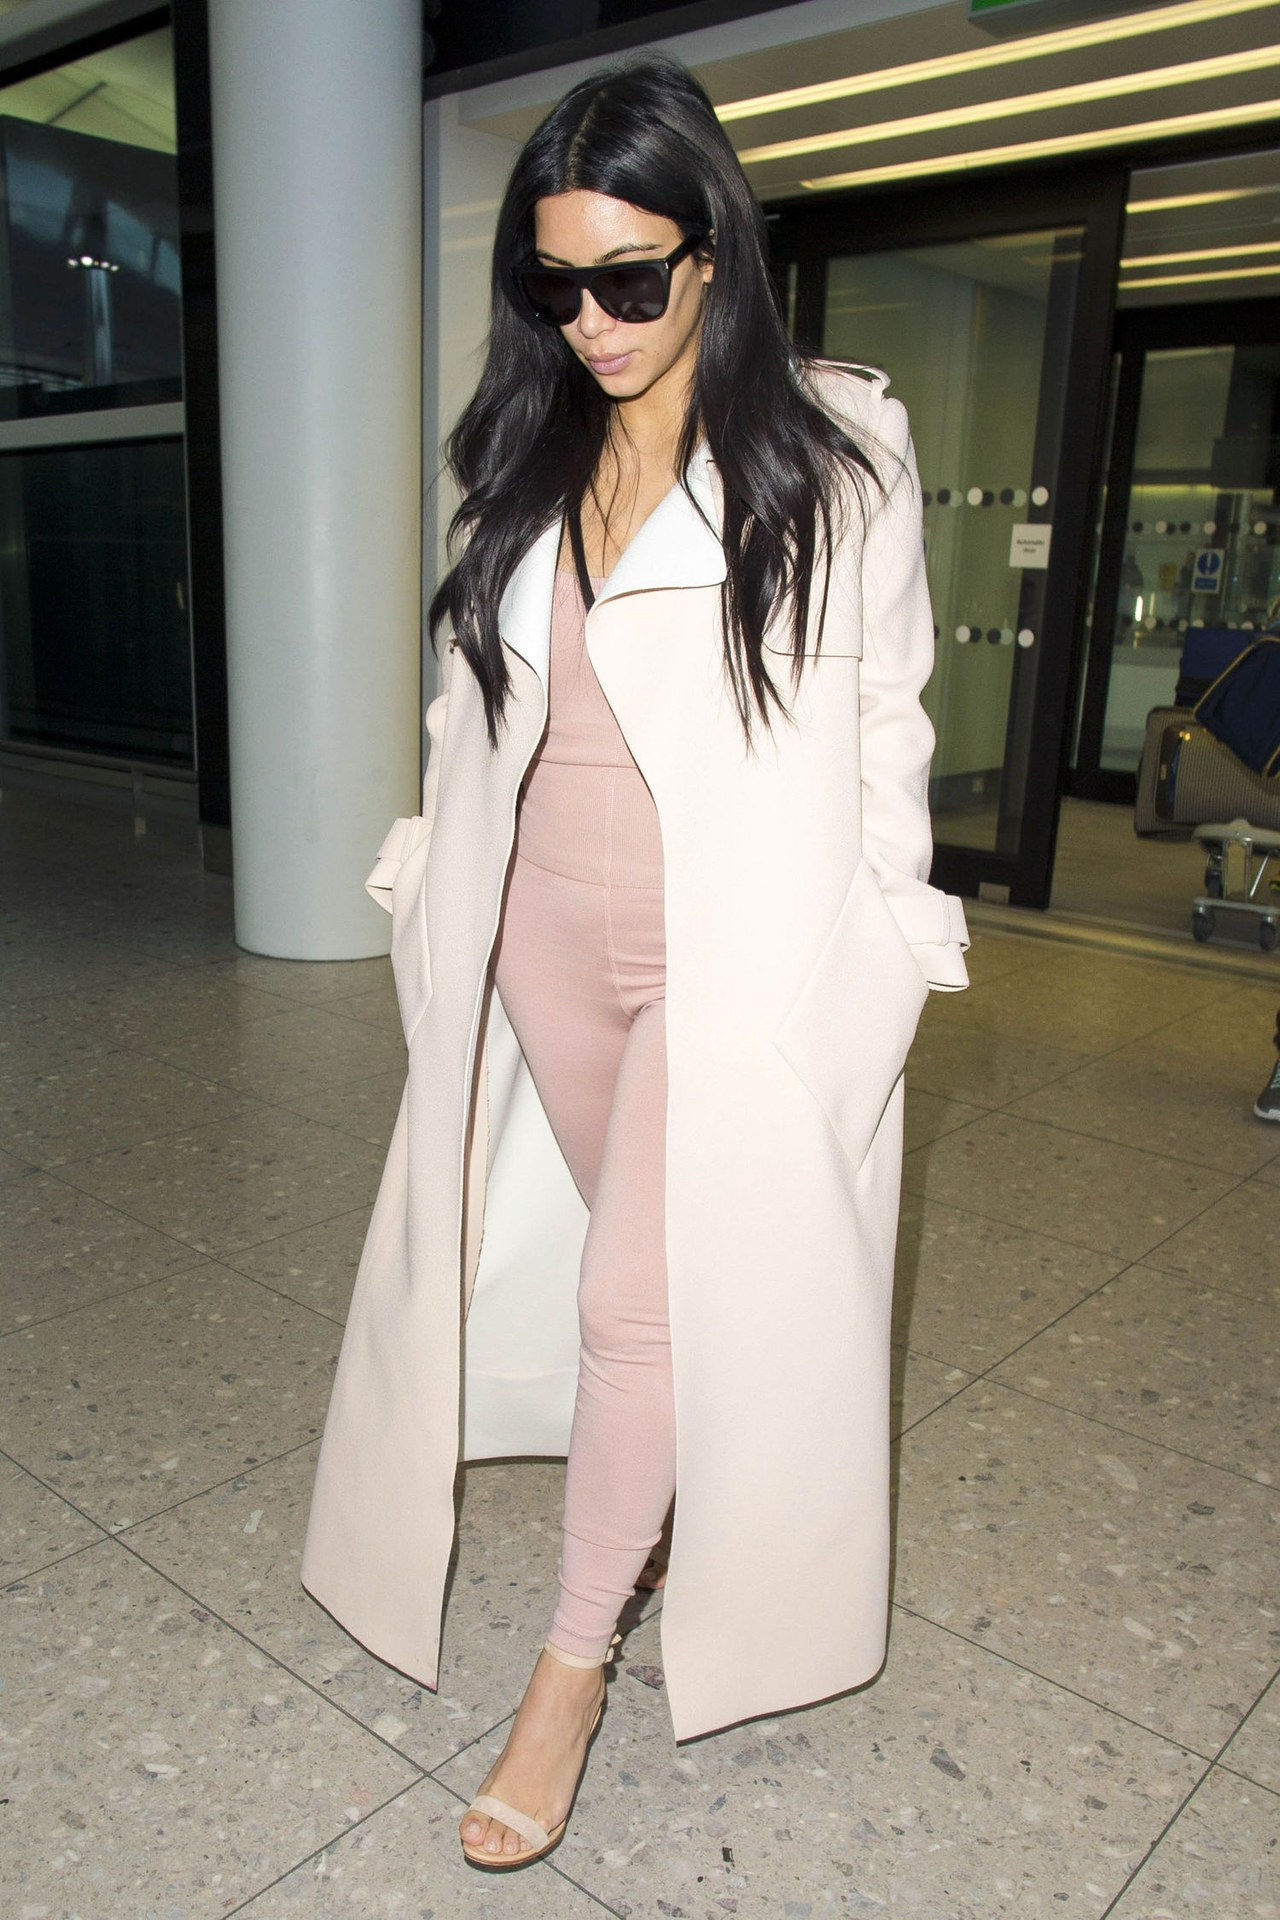 كيم kardashian tight pink jumpsuit london heathrow airport june 2015